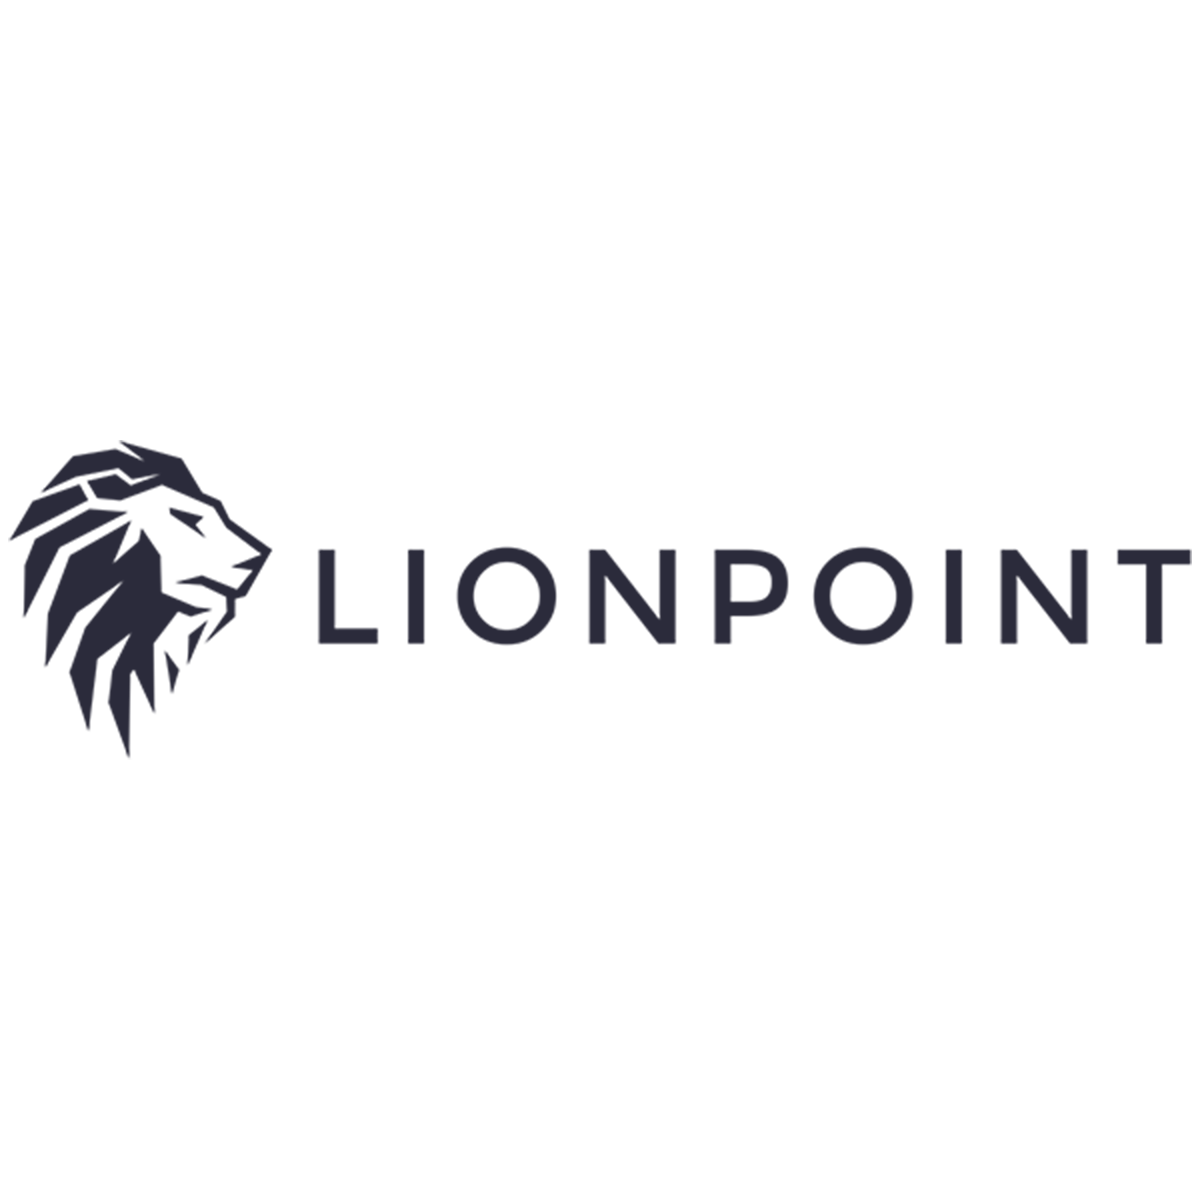 Lionpoint